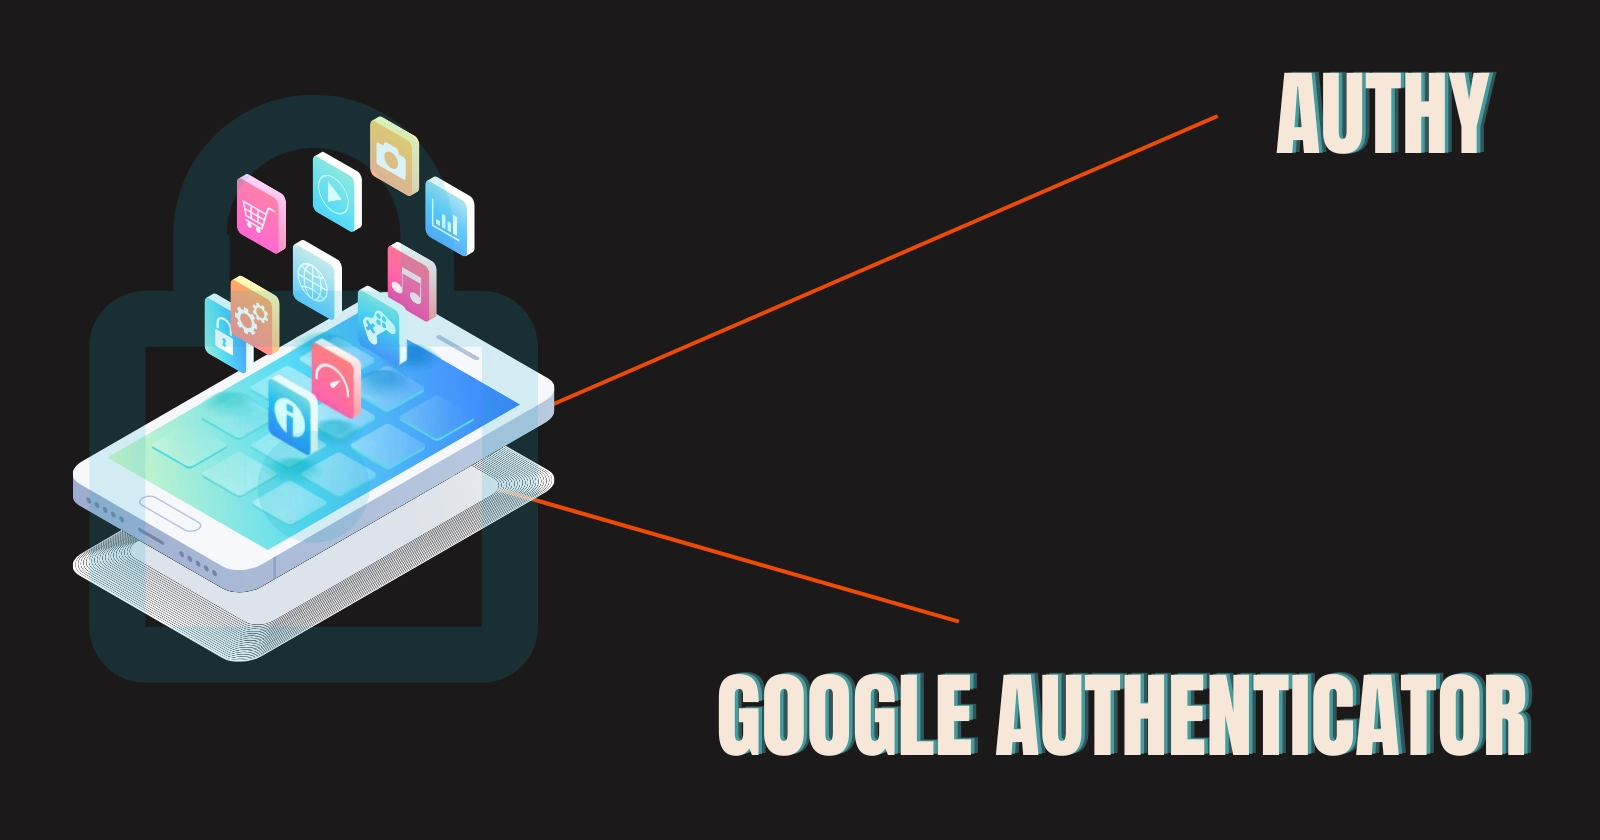 Authy vs Google Authenticator